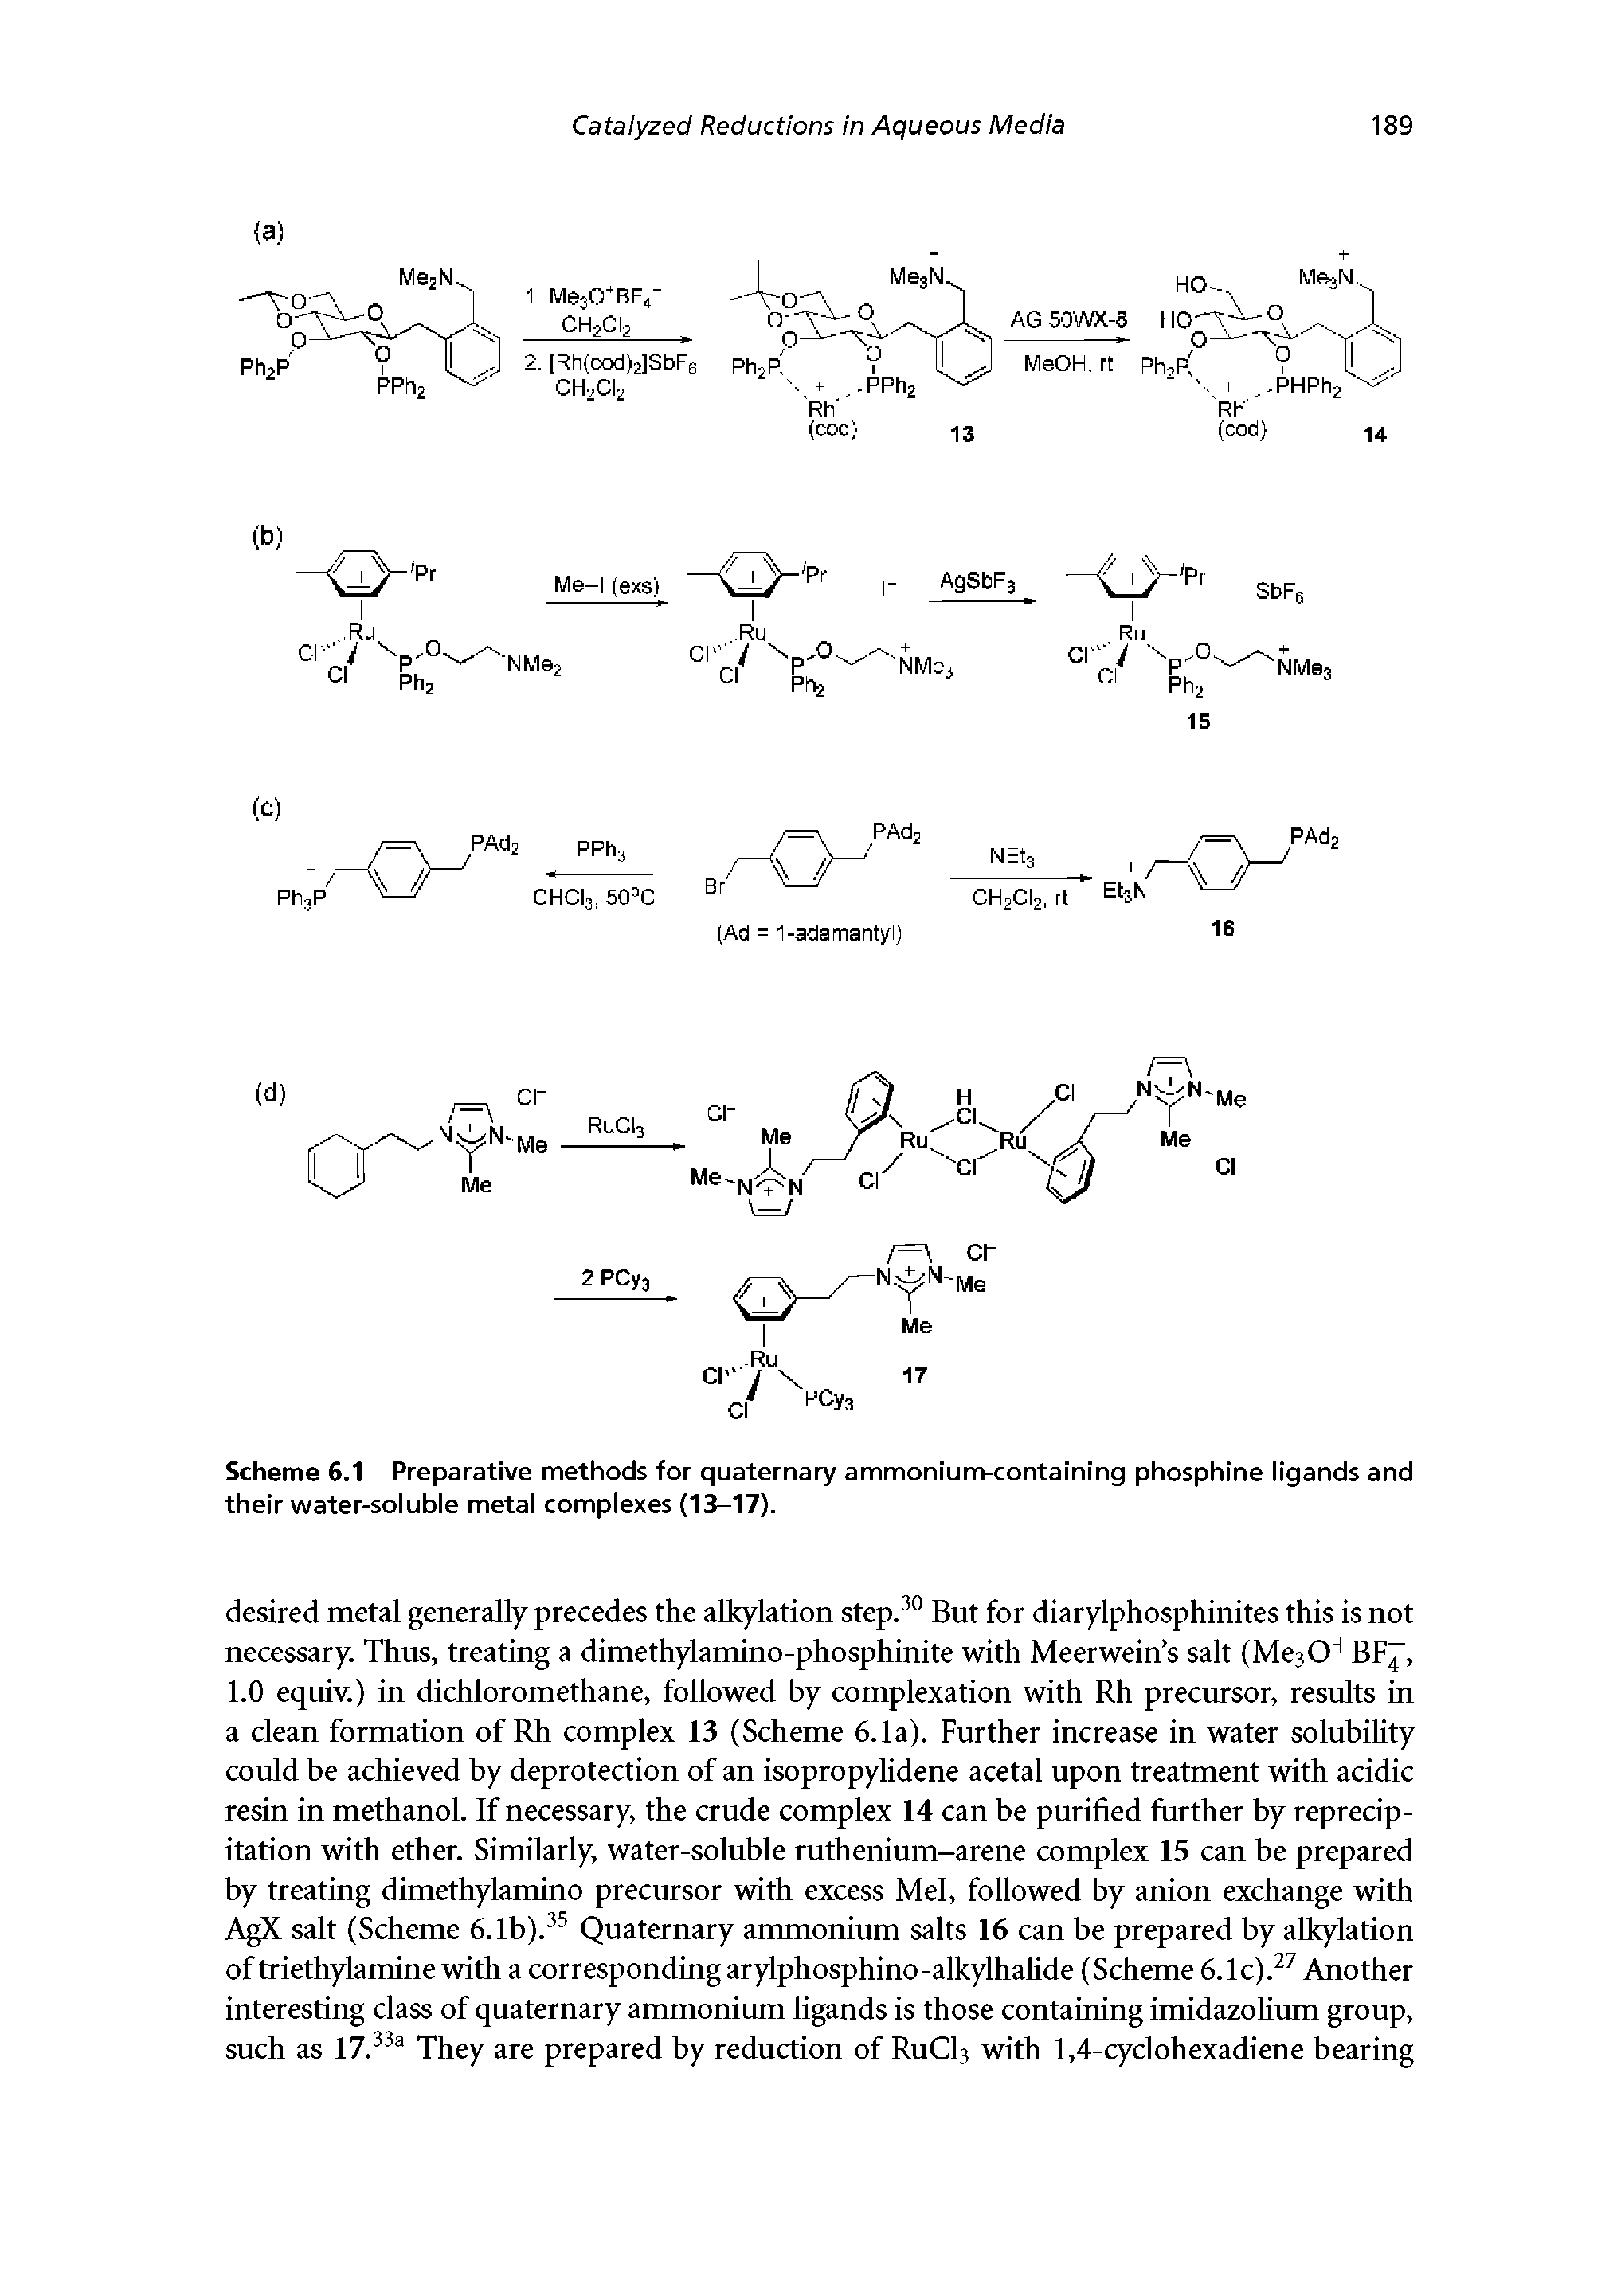 Scheme 6.1 Preparative methods for quaternary ammonium-containing phosphine iigands and their water-soiubie metai compiexes (13-17).